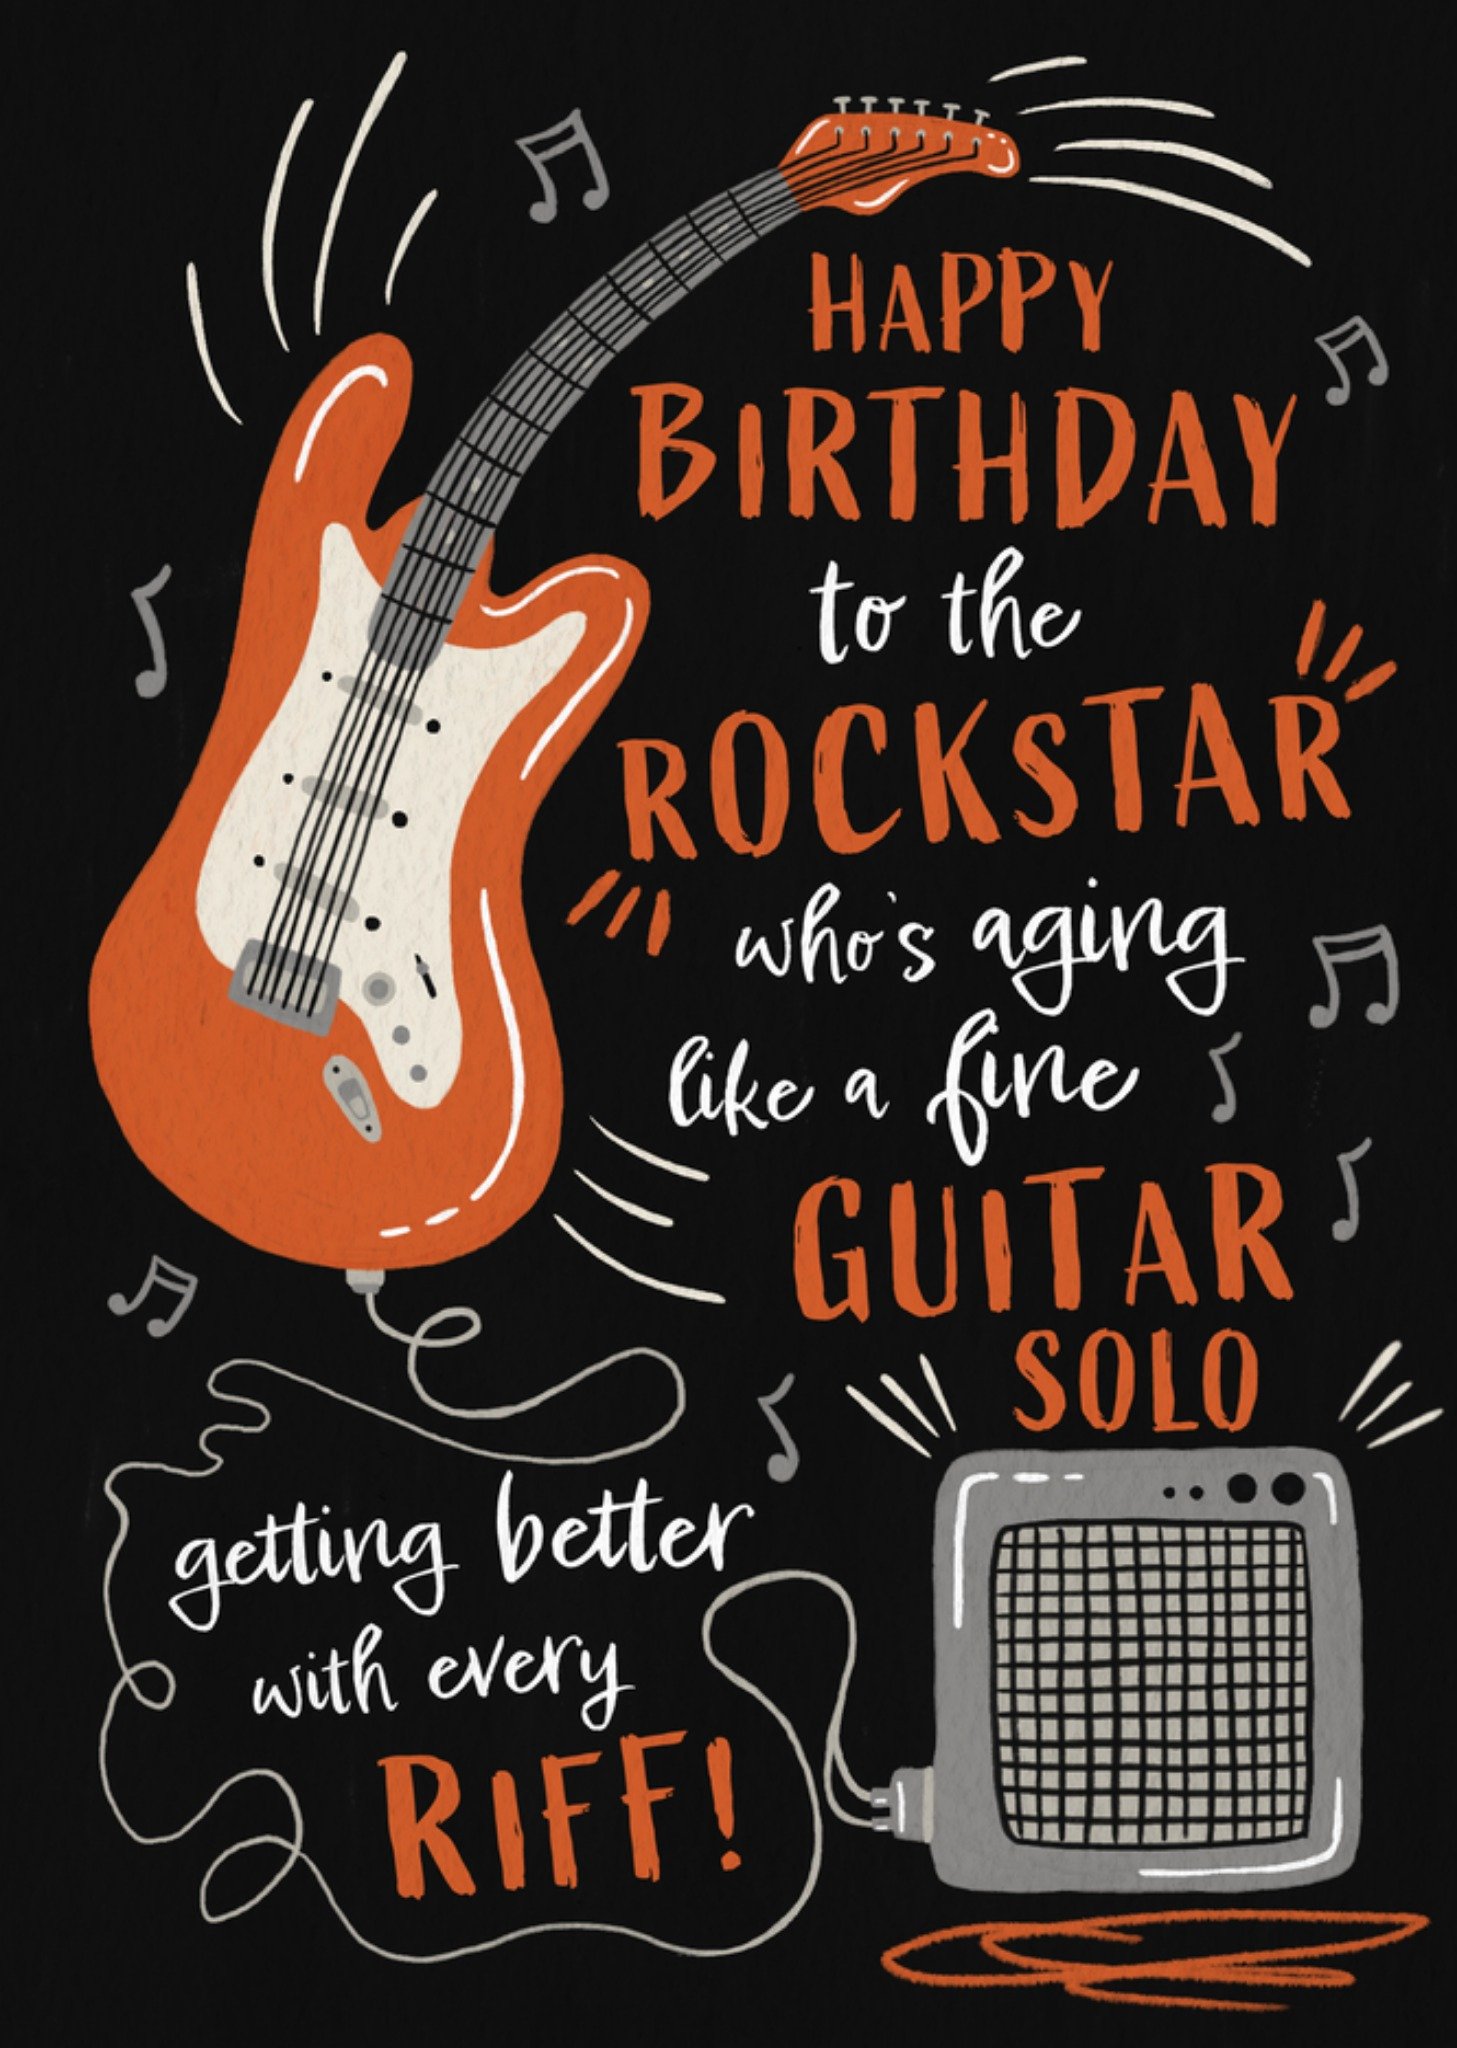 Moonpig Aging Like A Fine Guitar Solo Rockstar Birthday Card, Large